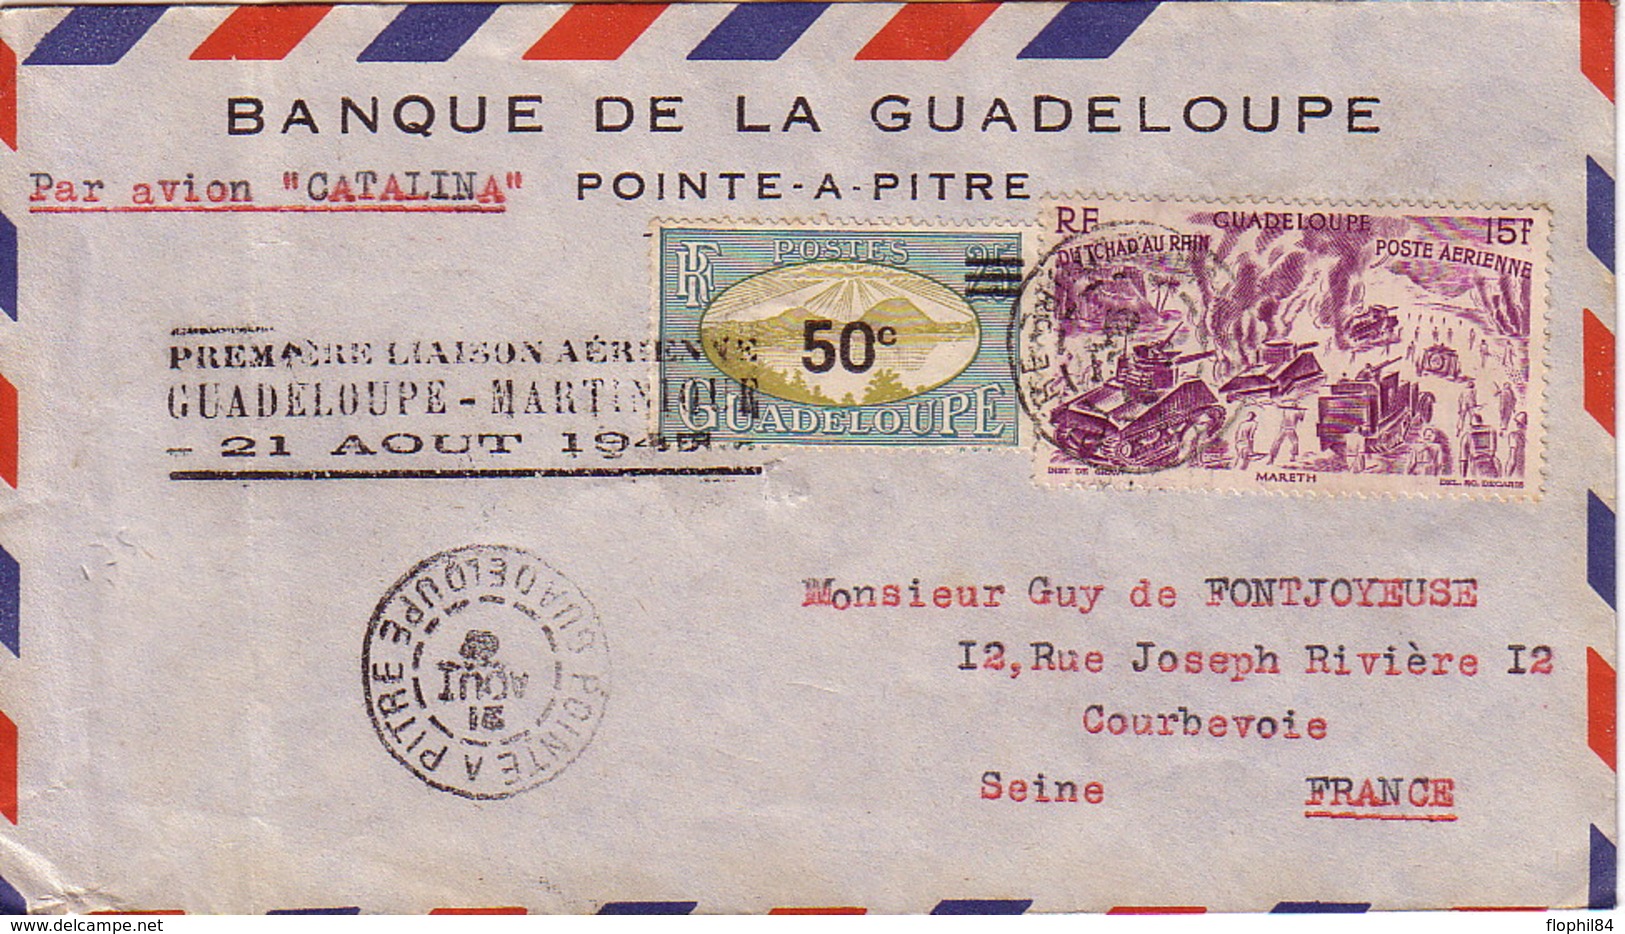 GUADELOUPE - POINTE A PITRE - 1er LIAISON AERIENNE GUADELOUPE-MARTINIQUE - 21 AOUT 1947. - Storia Postale